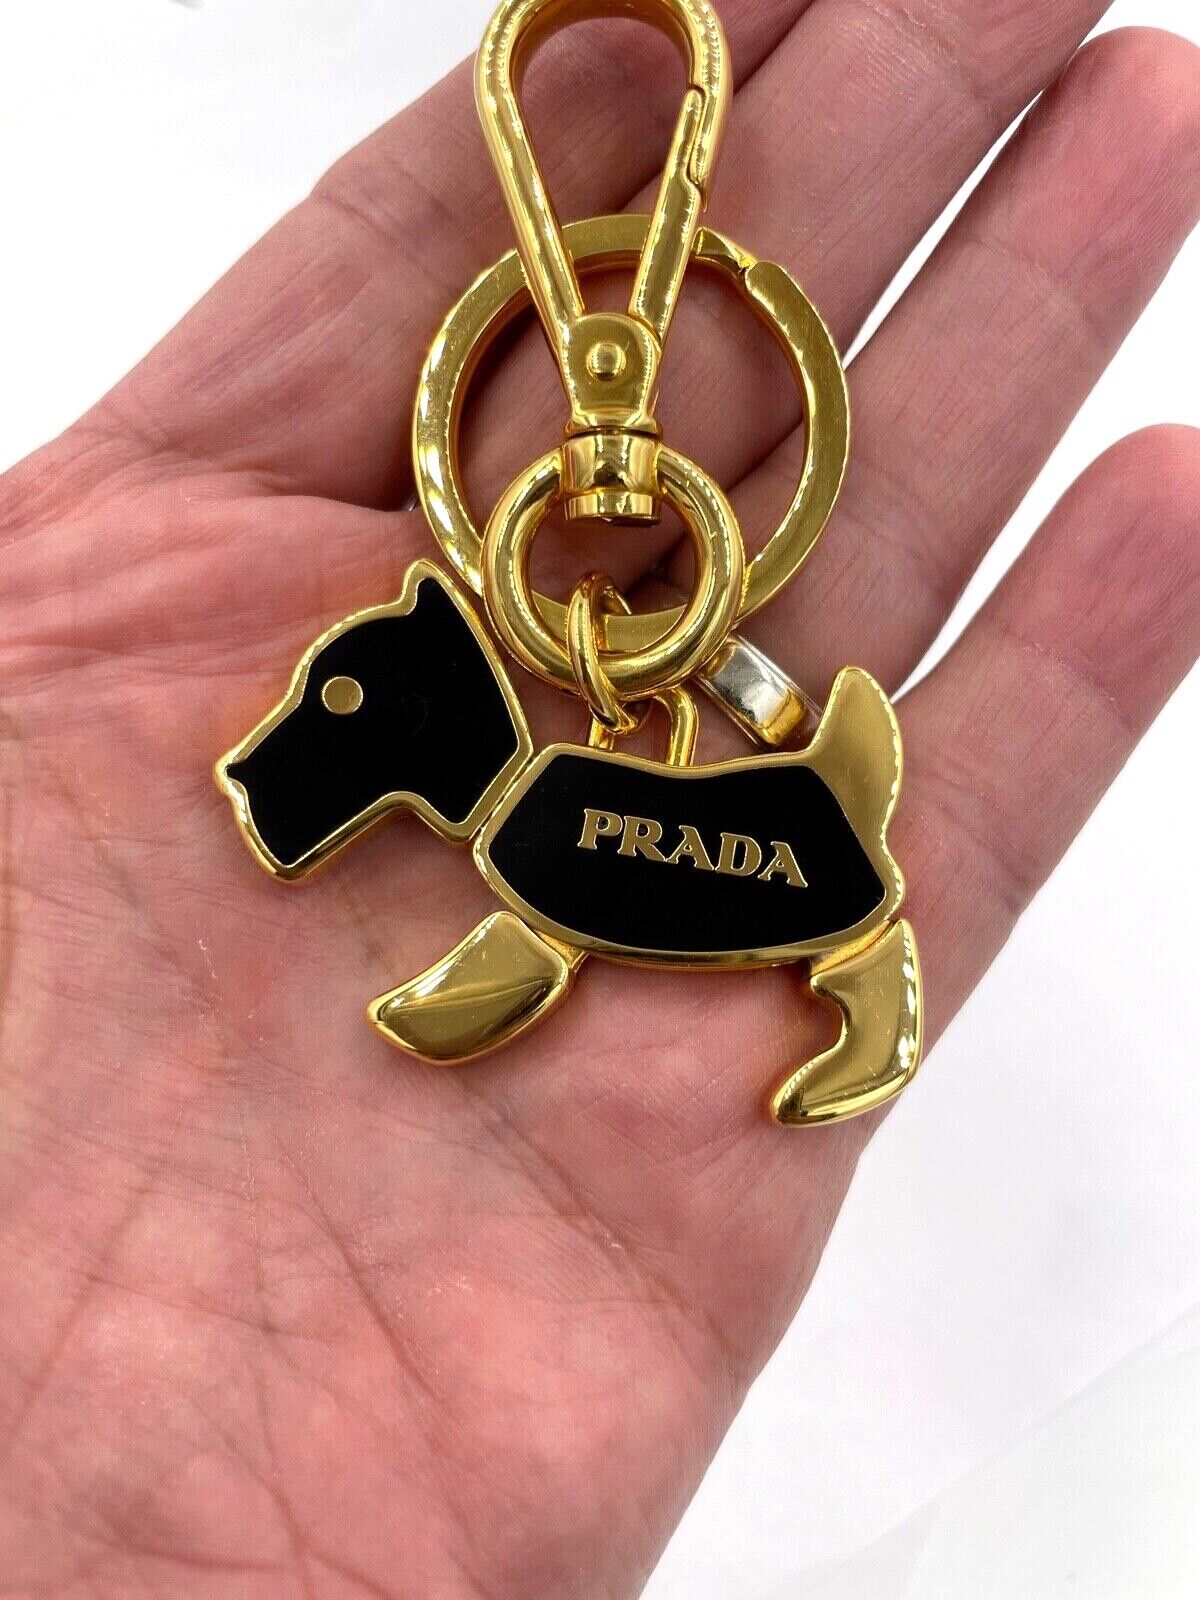 Prada Gold & Black Scottish Dog Keychain Or Bagchain